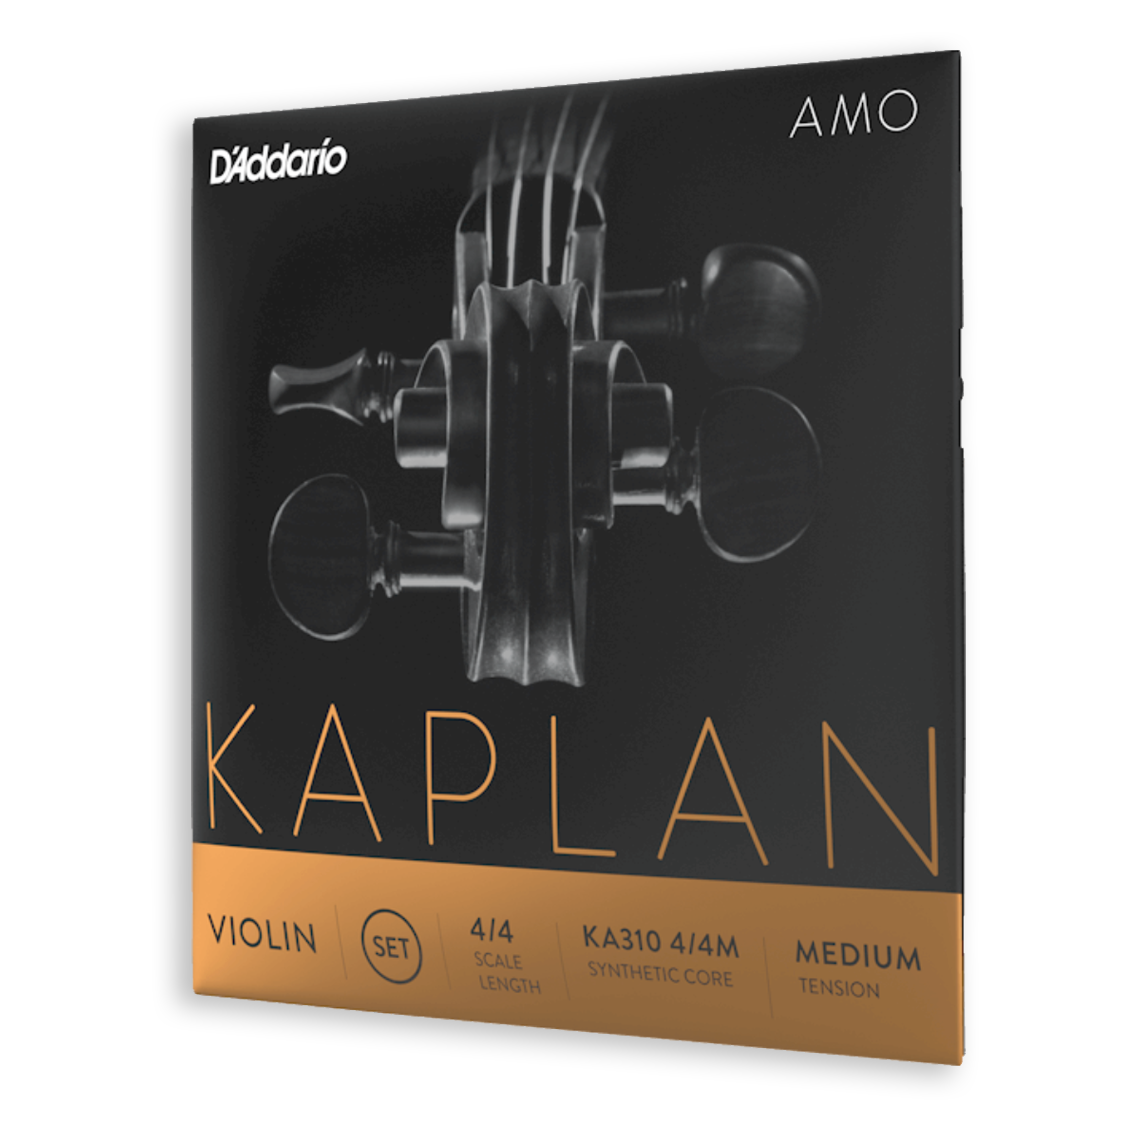 Kaplan Amo Violin G string